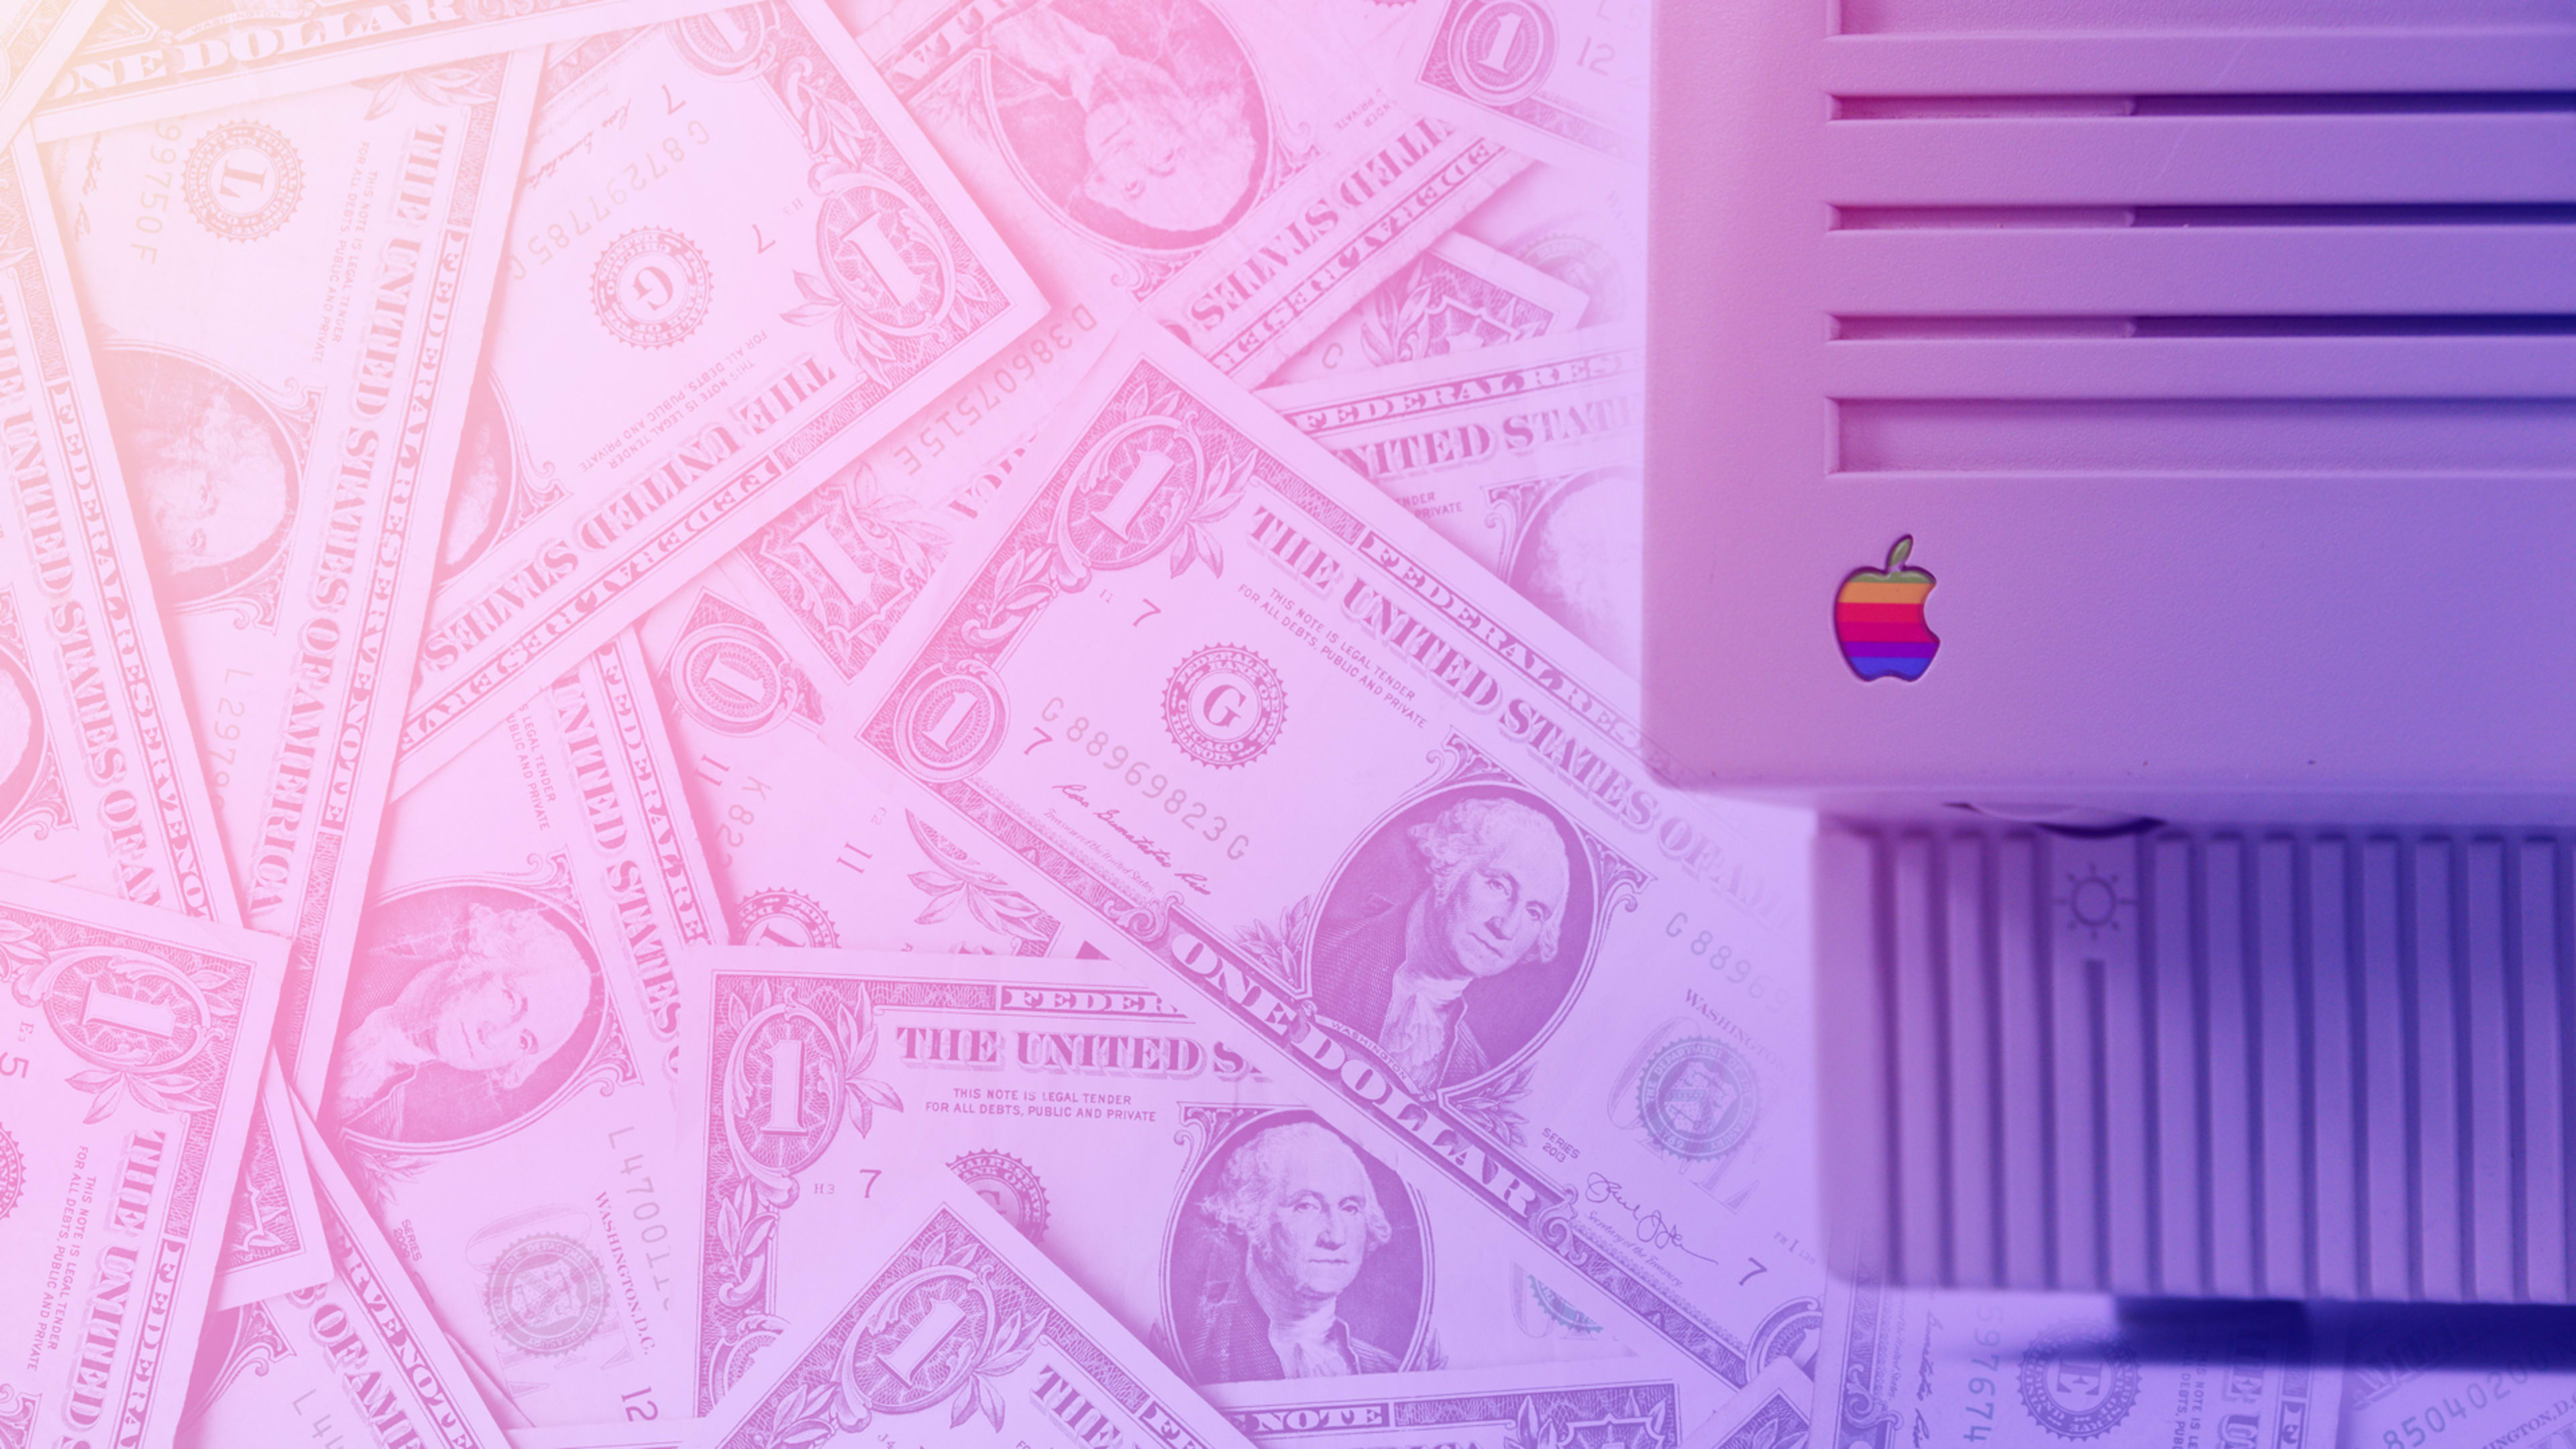 Is Apple a money machine or still worthy of true faith? It’s both